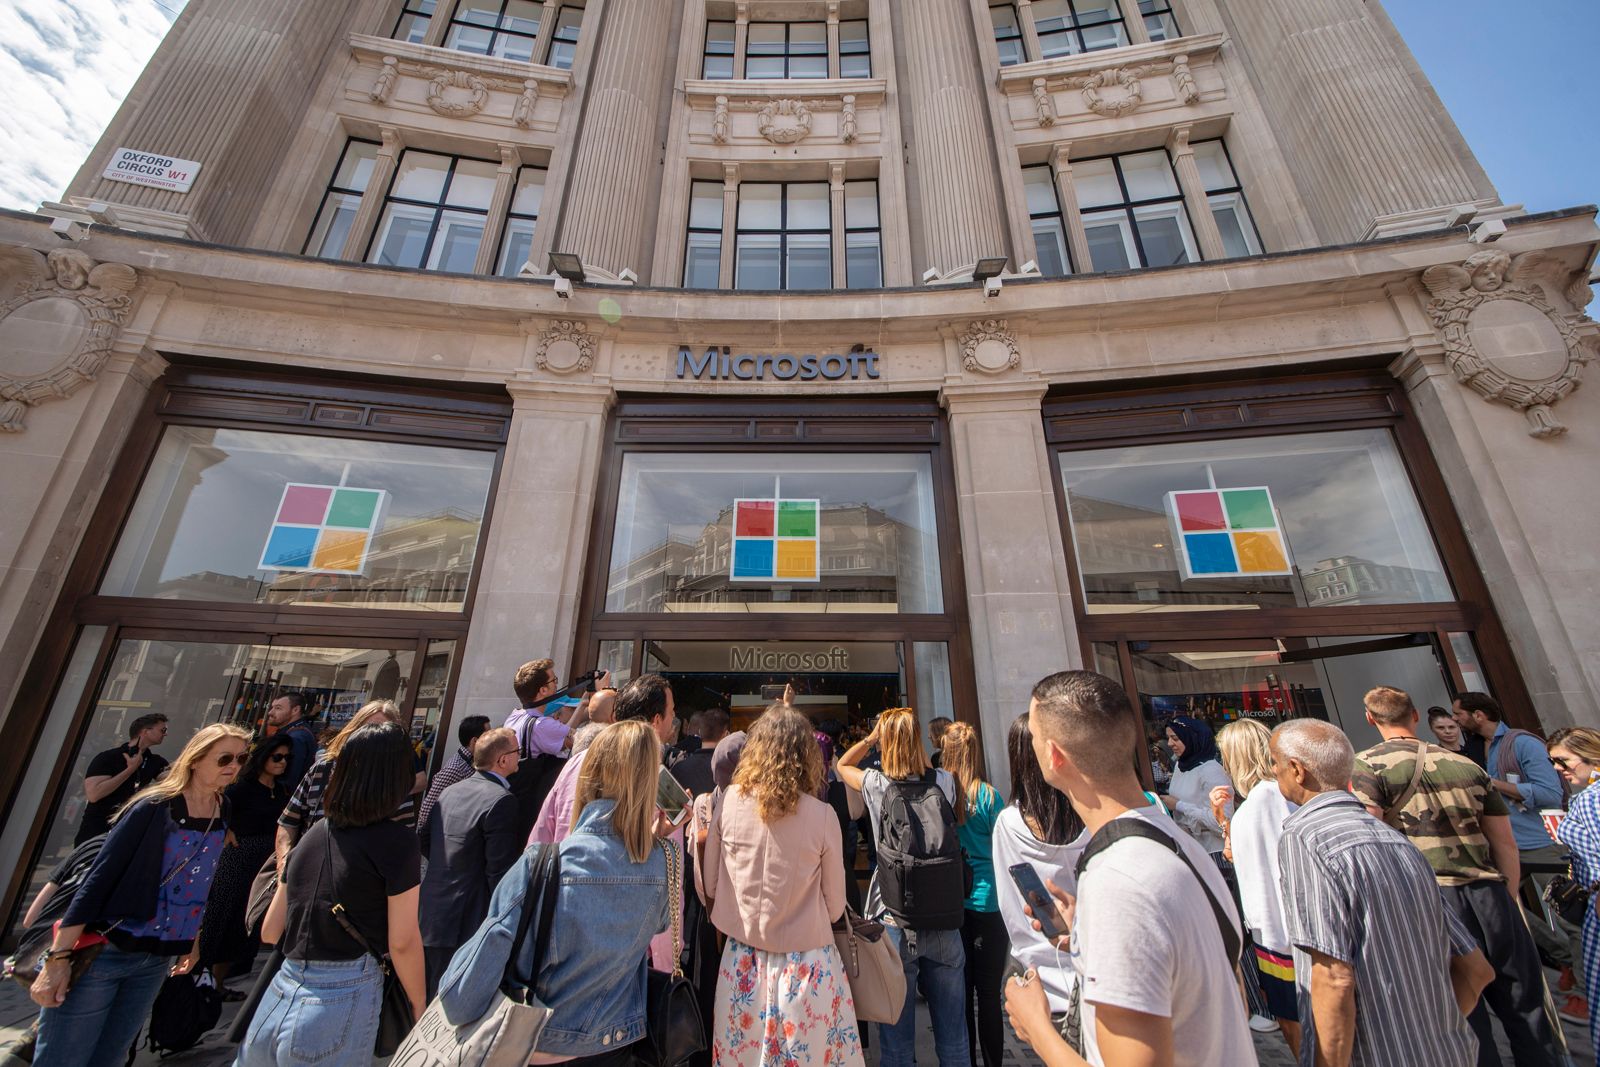 Inside Microsoft’s new flagship London store image 1